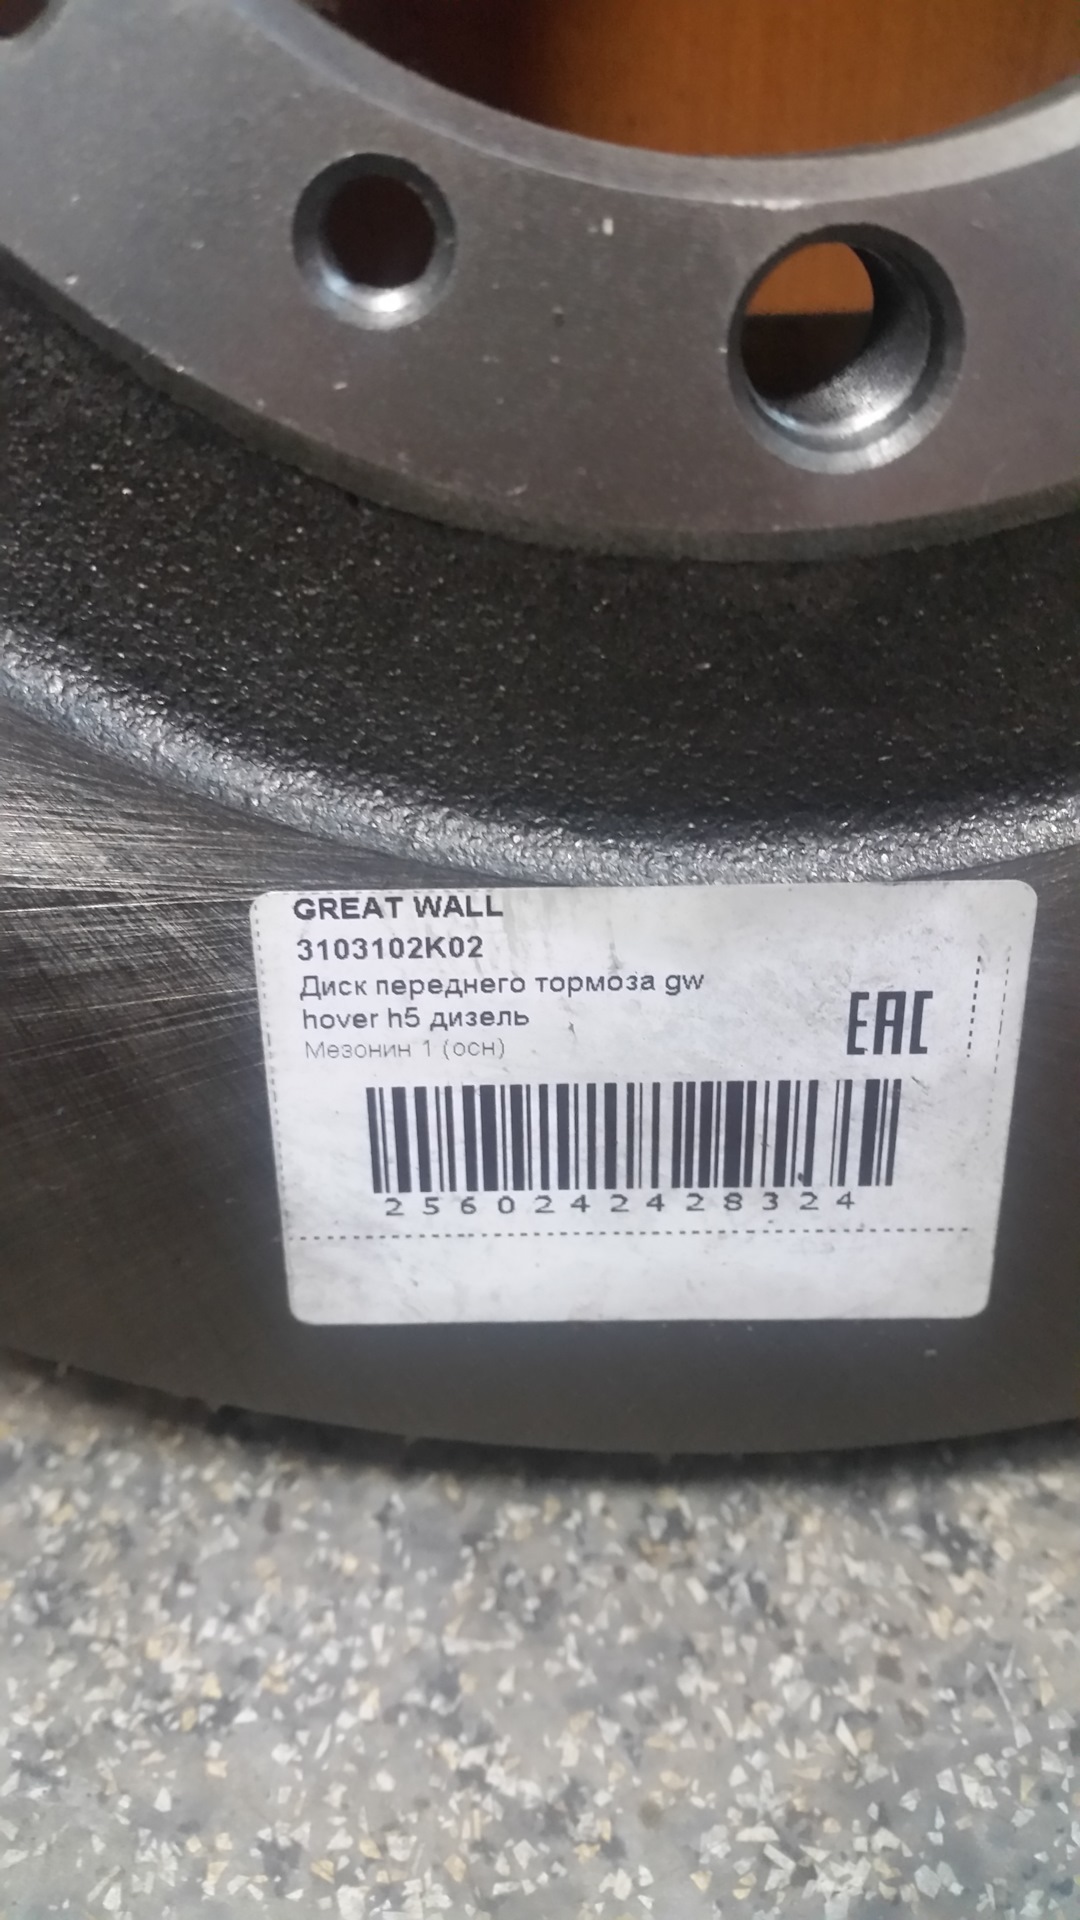 Тормозные диски ховер н5. Great Wall 3103102 k02 диск тормозной размер. Диск тормозной передний Hover н5. Диск тормозной передний Ховер н2 дизель 2.8. Тормозные диски Ховер н2.